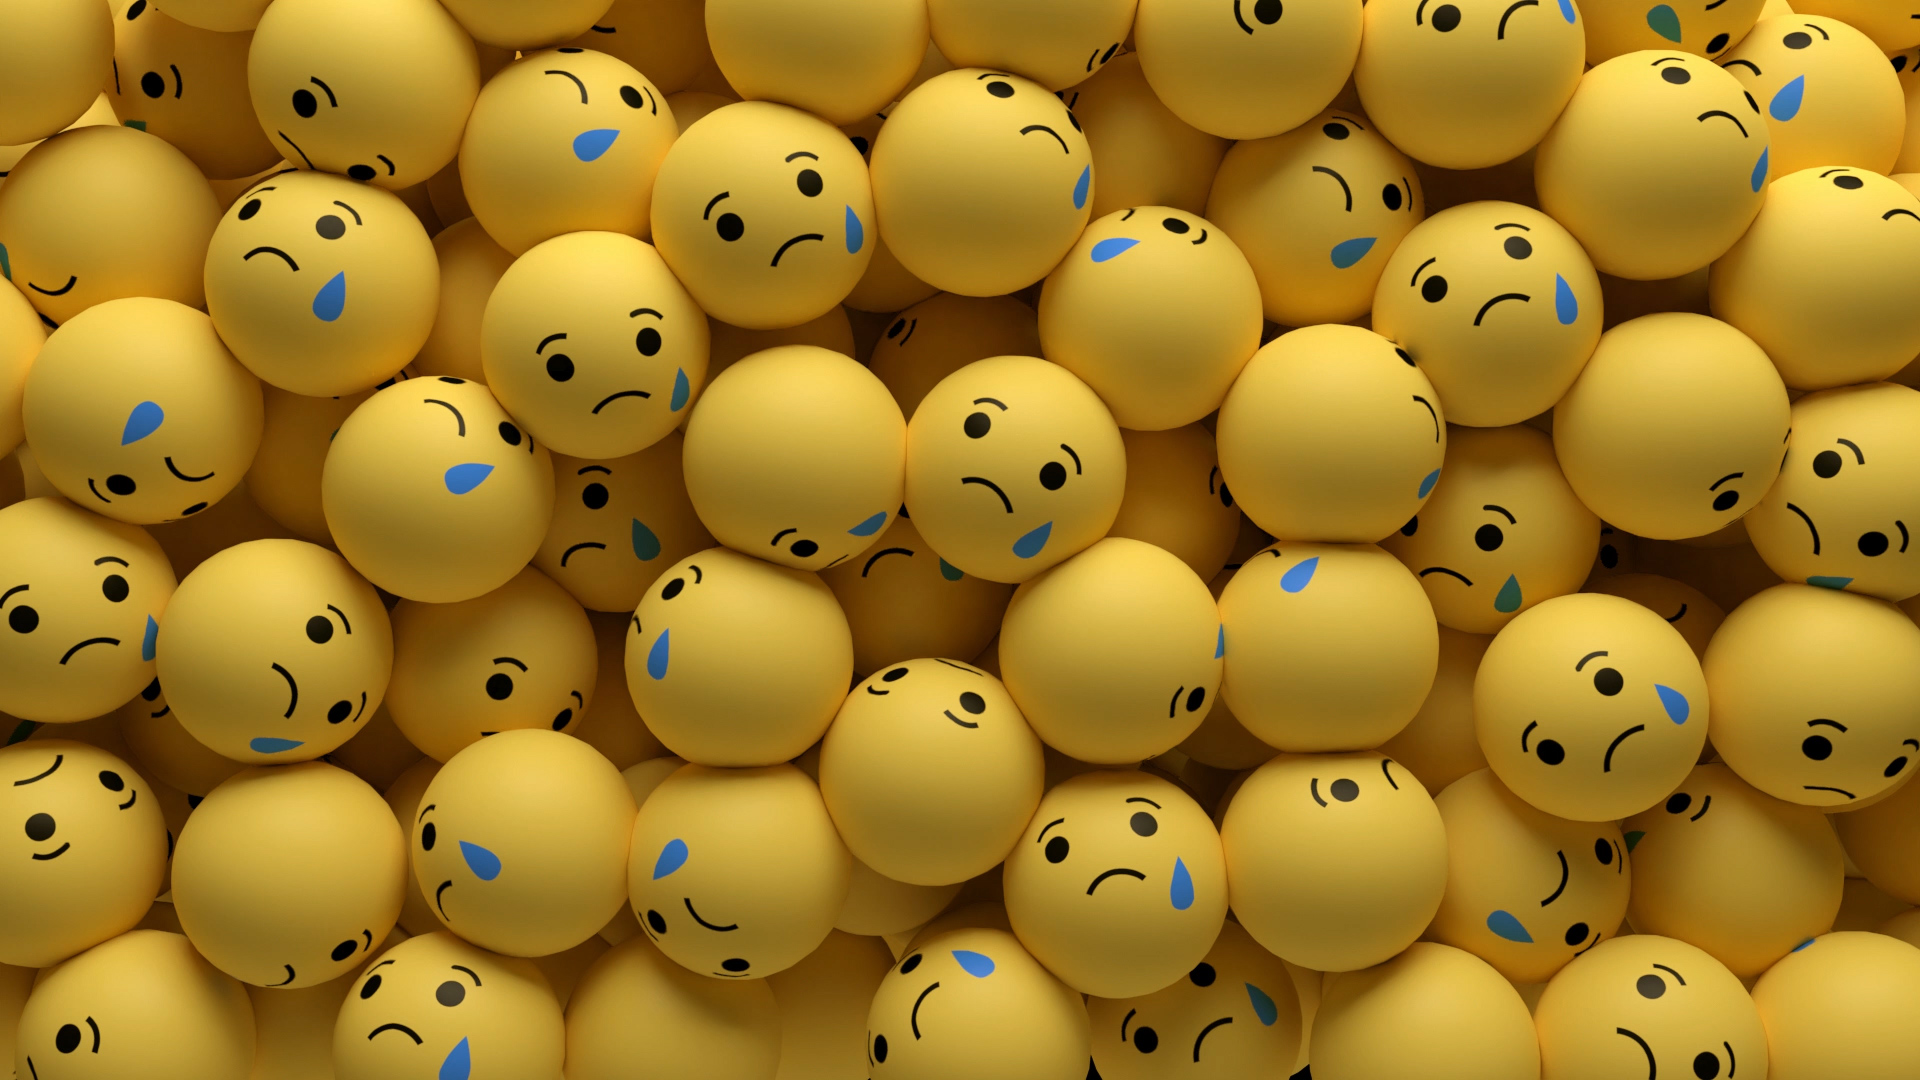 Download Sad Emoji 3D wallpaper, Download free amazing High Resolution  backgrounds images | CorelDraw Design (Download Free CDR, Vector, Stock  Images, Tutorials, Tips & Tricks)